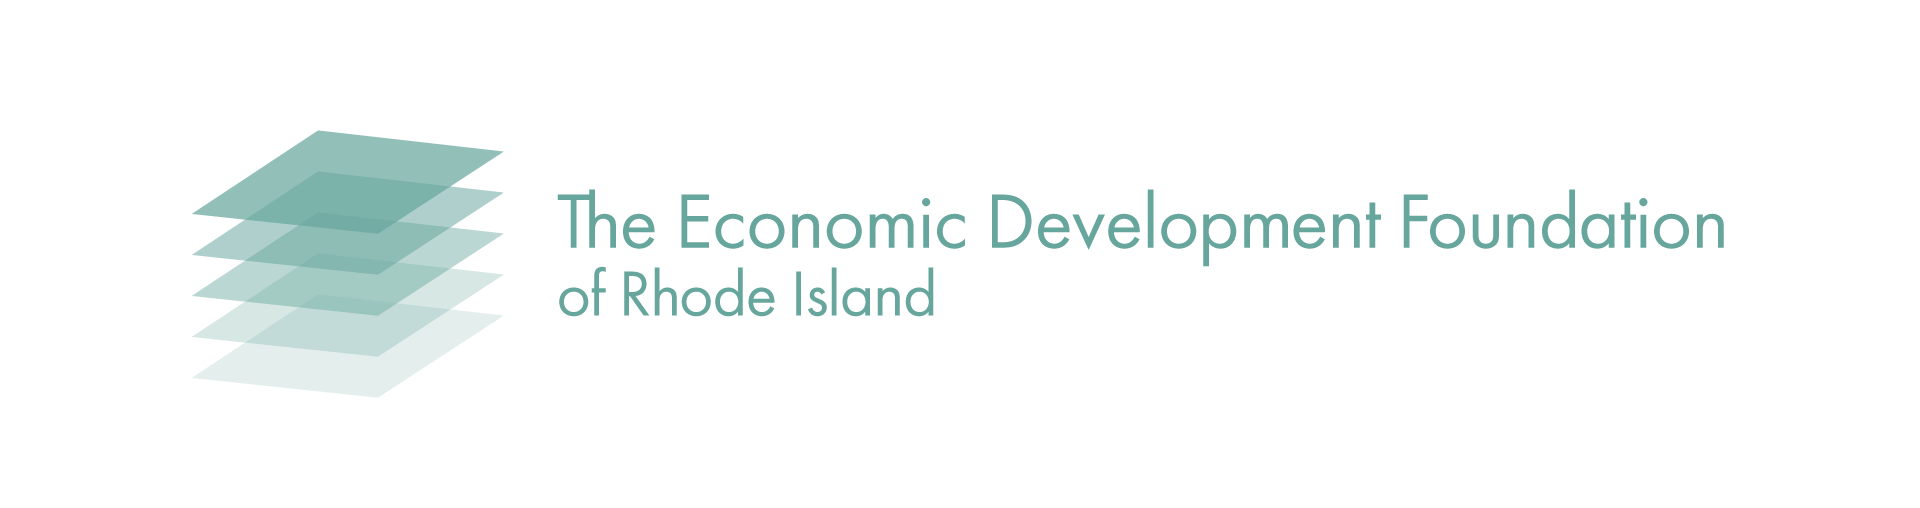 economic development foundation of rhode island